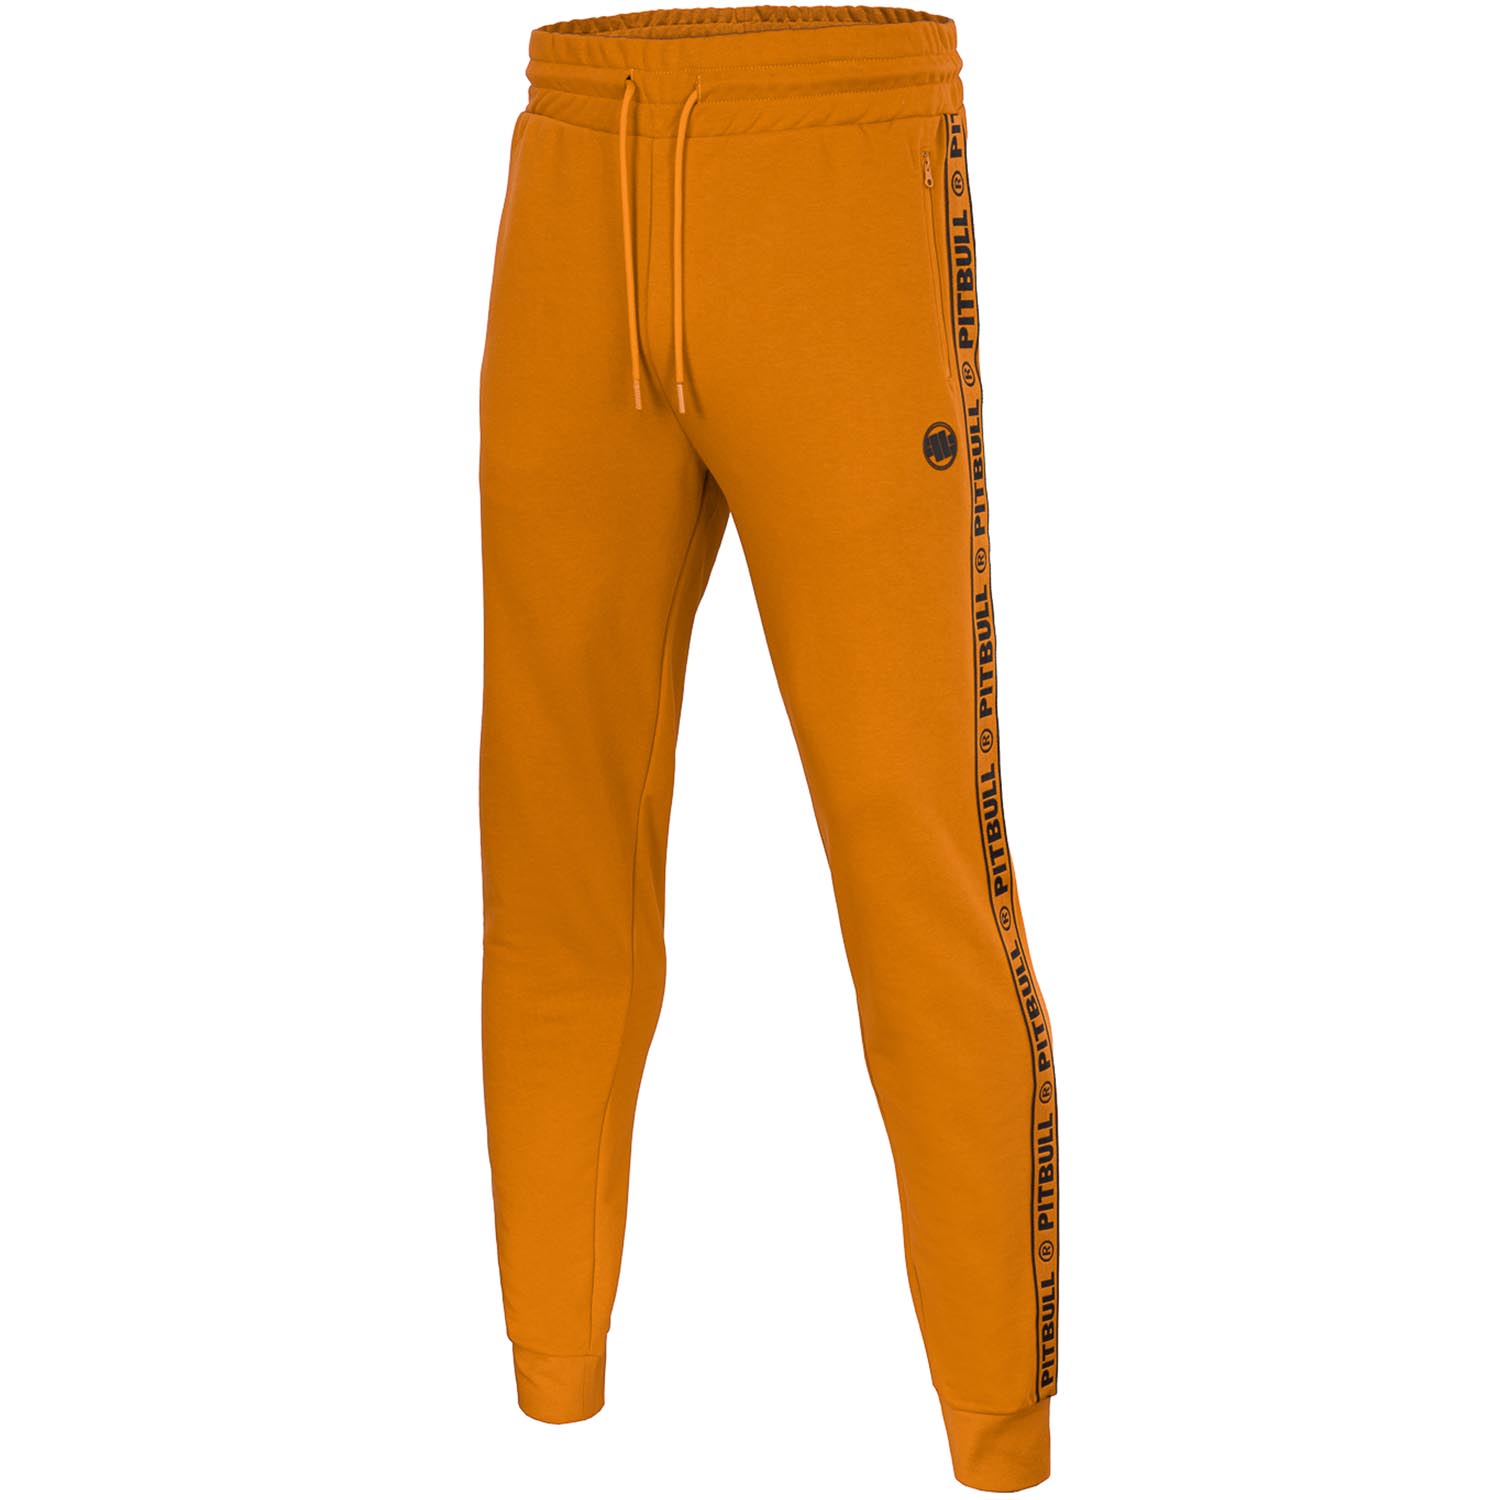 Pit Bull West Coast Jogging Pants, Meridan, yellow